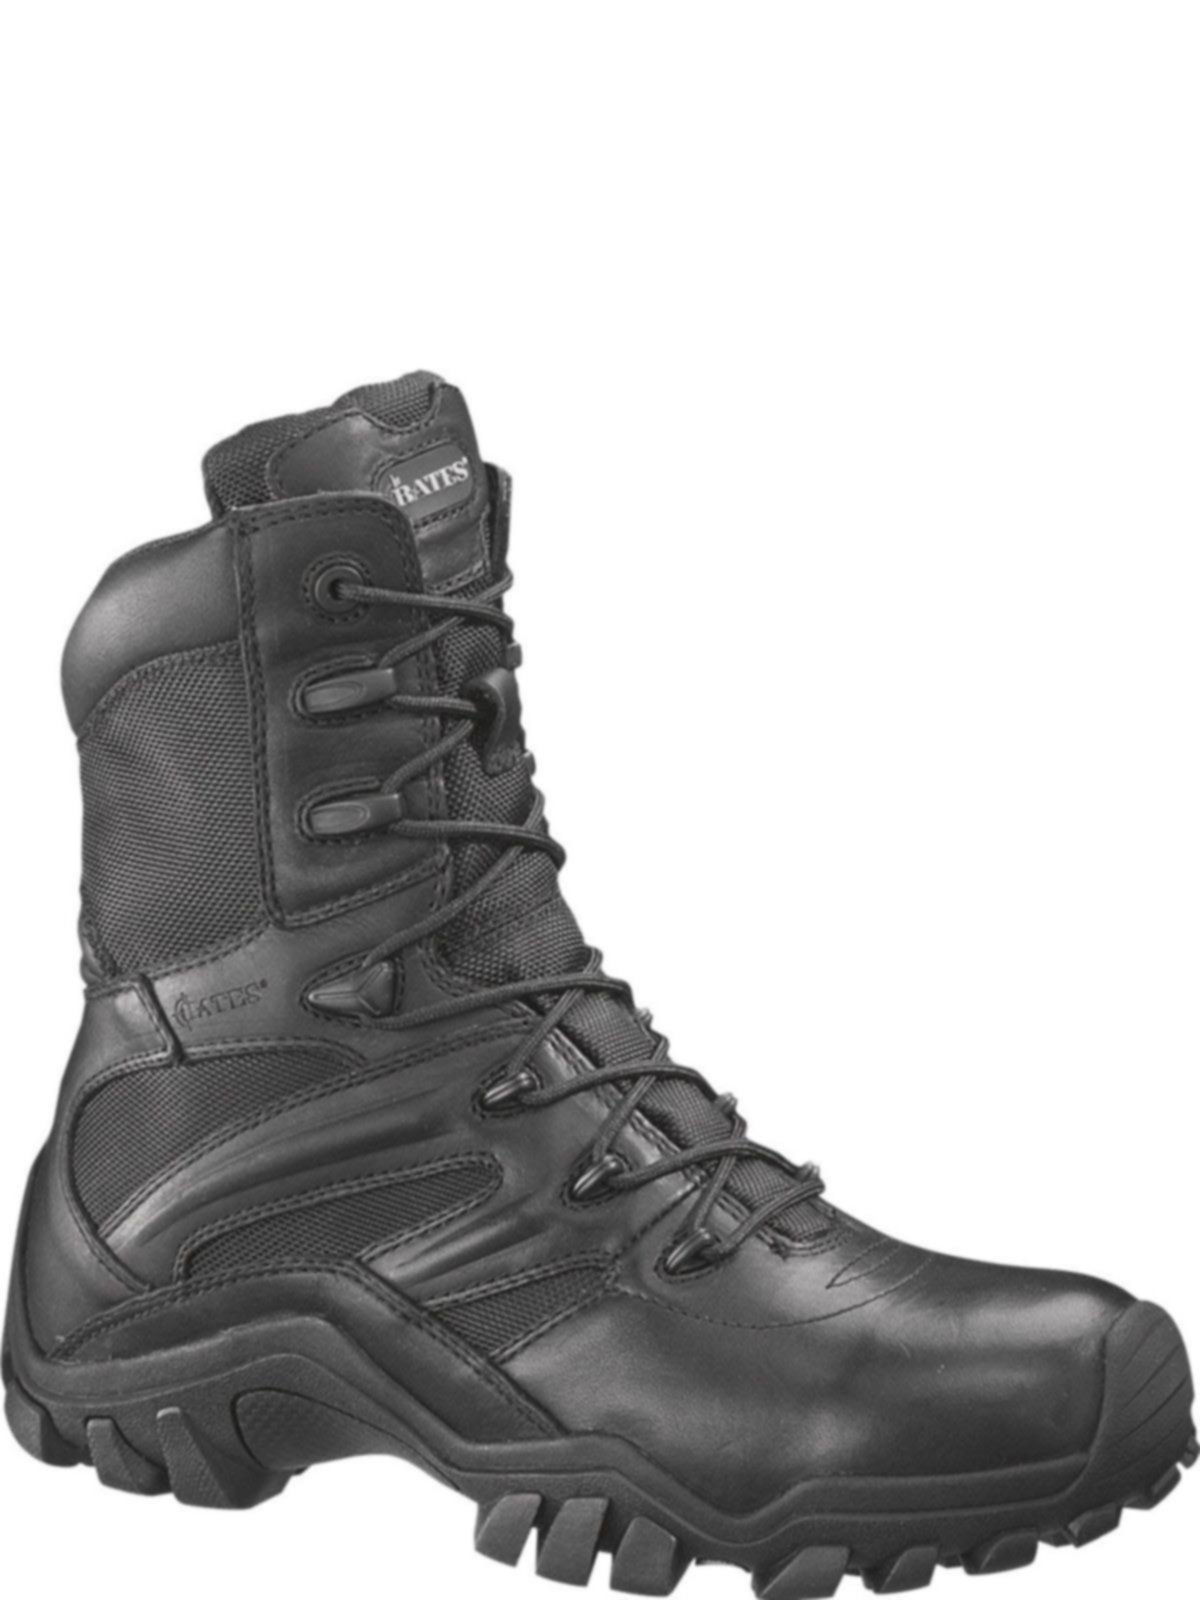 bates delta 8 side zip boots